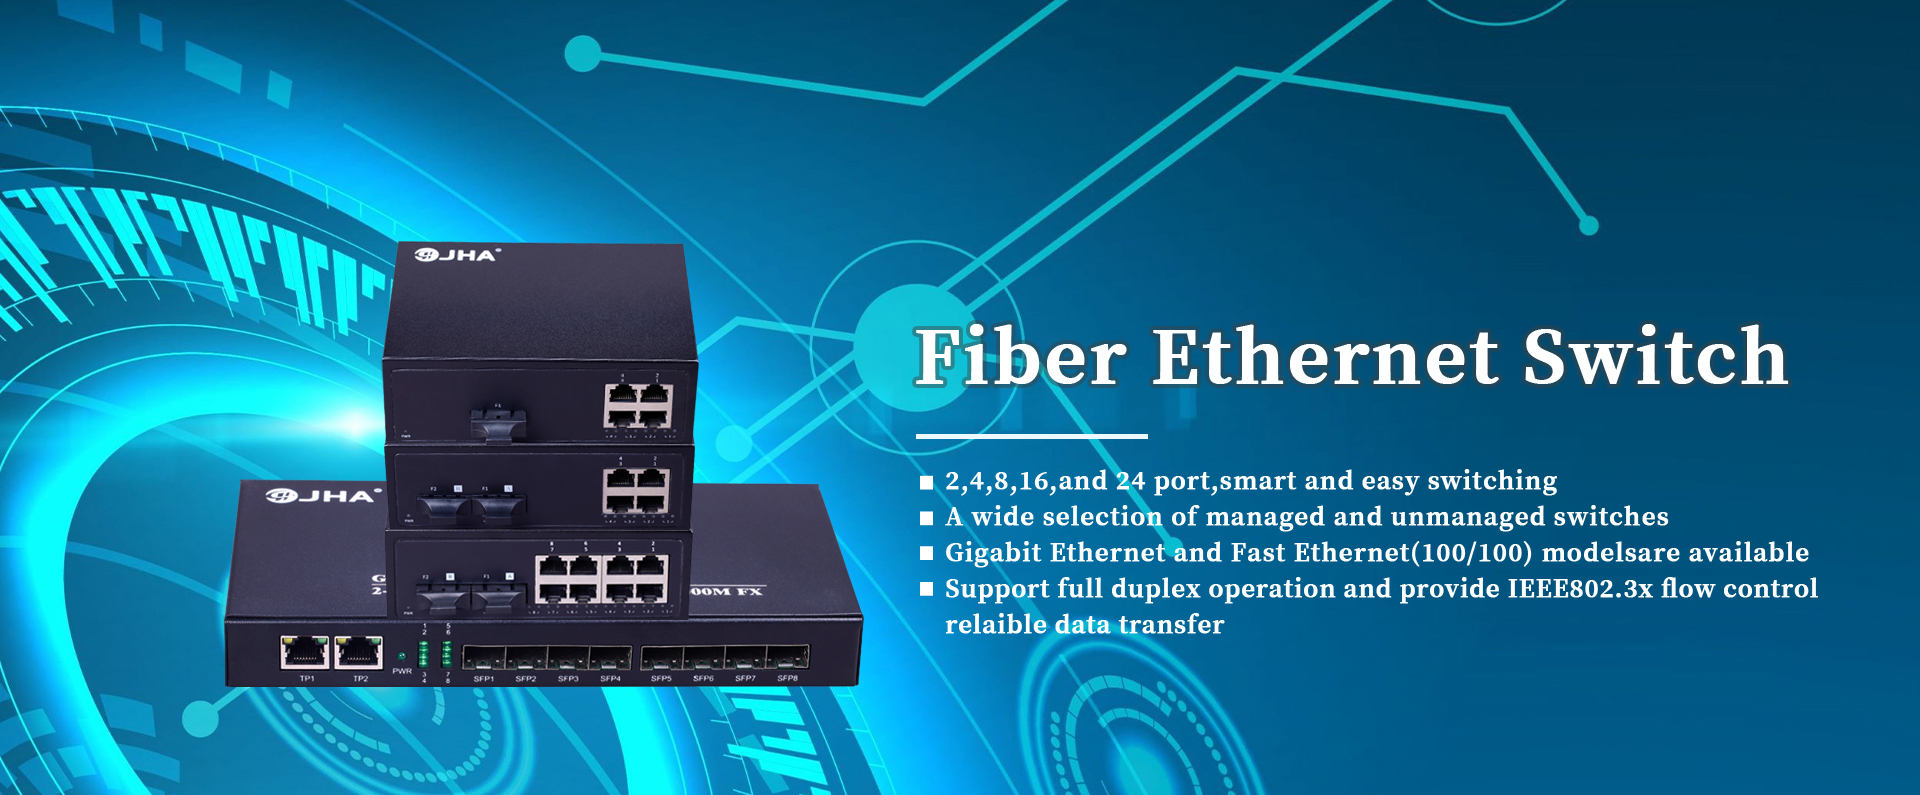 Fibre Ethernet Switch